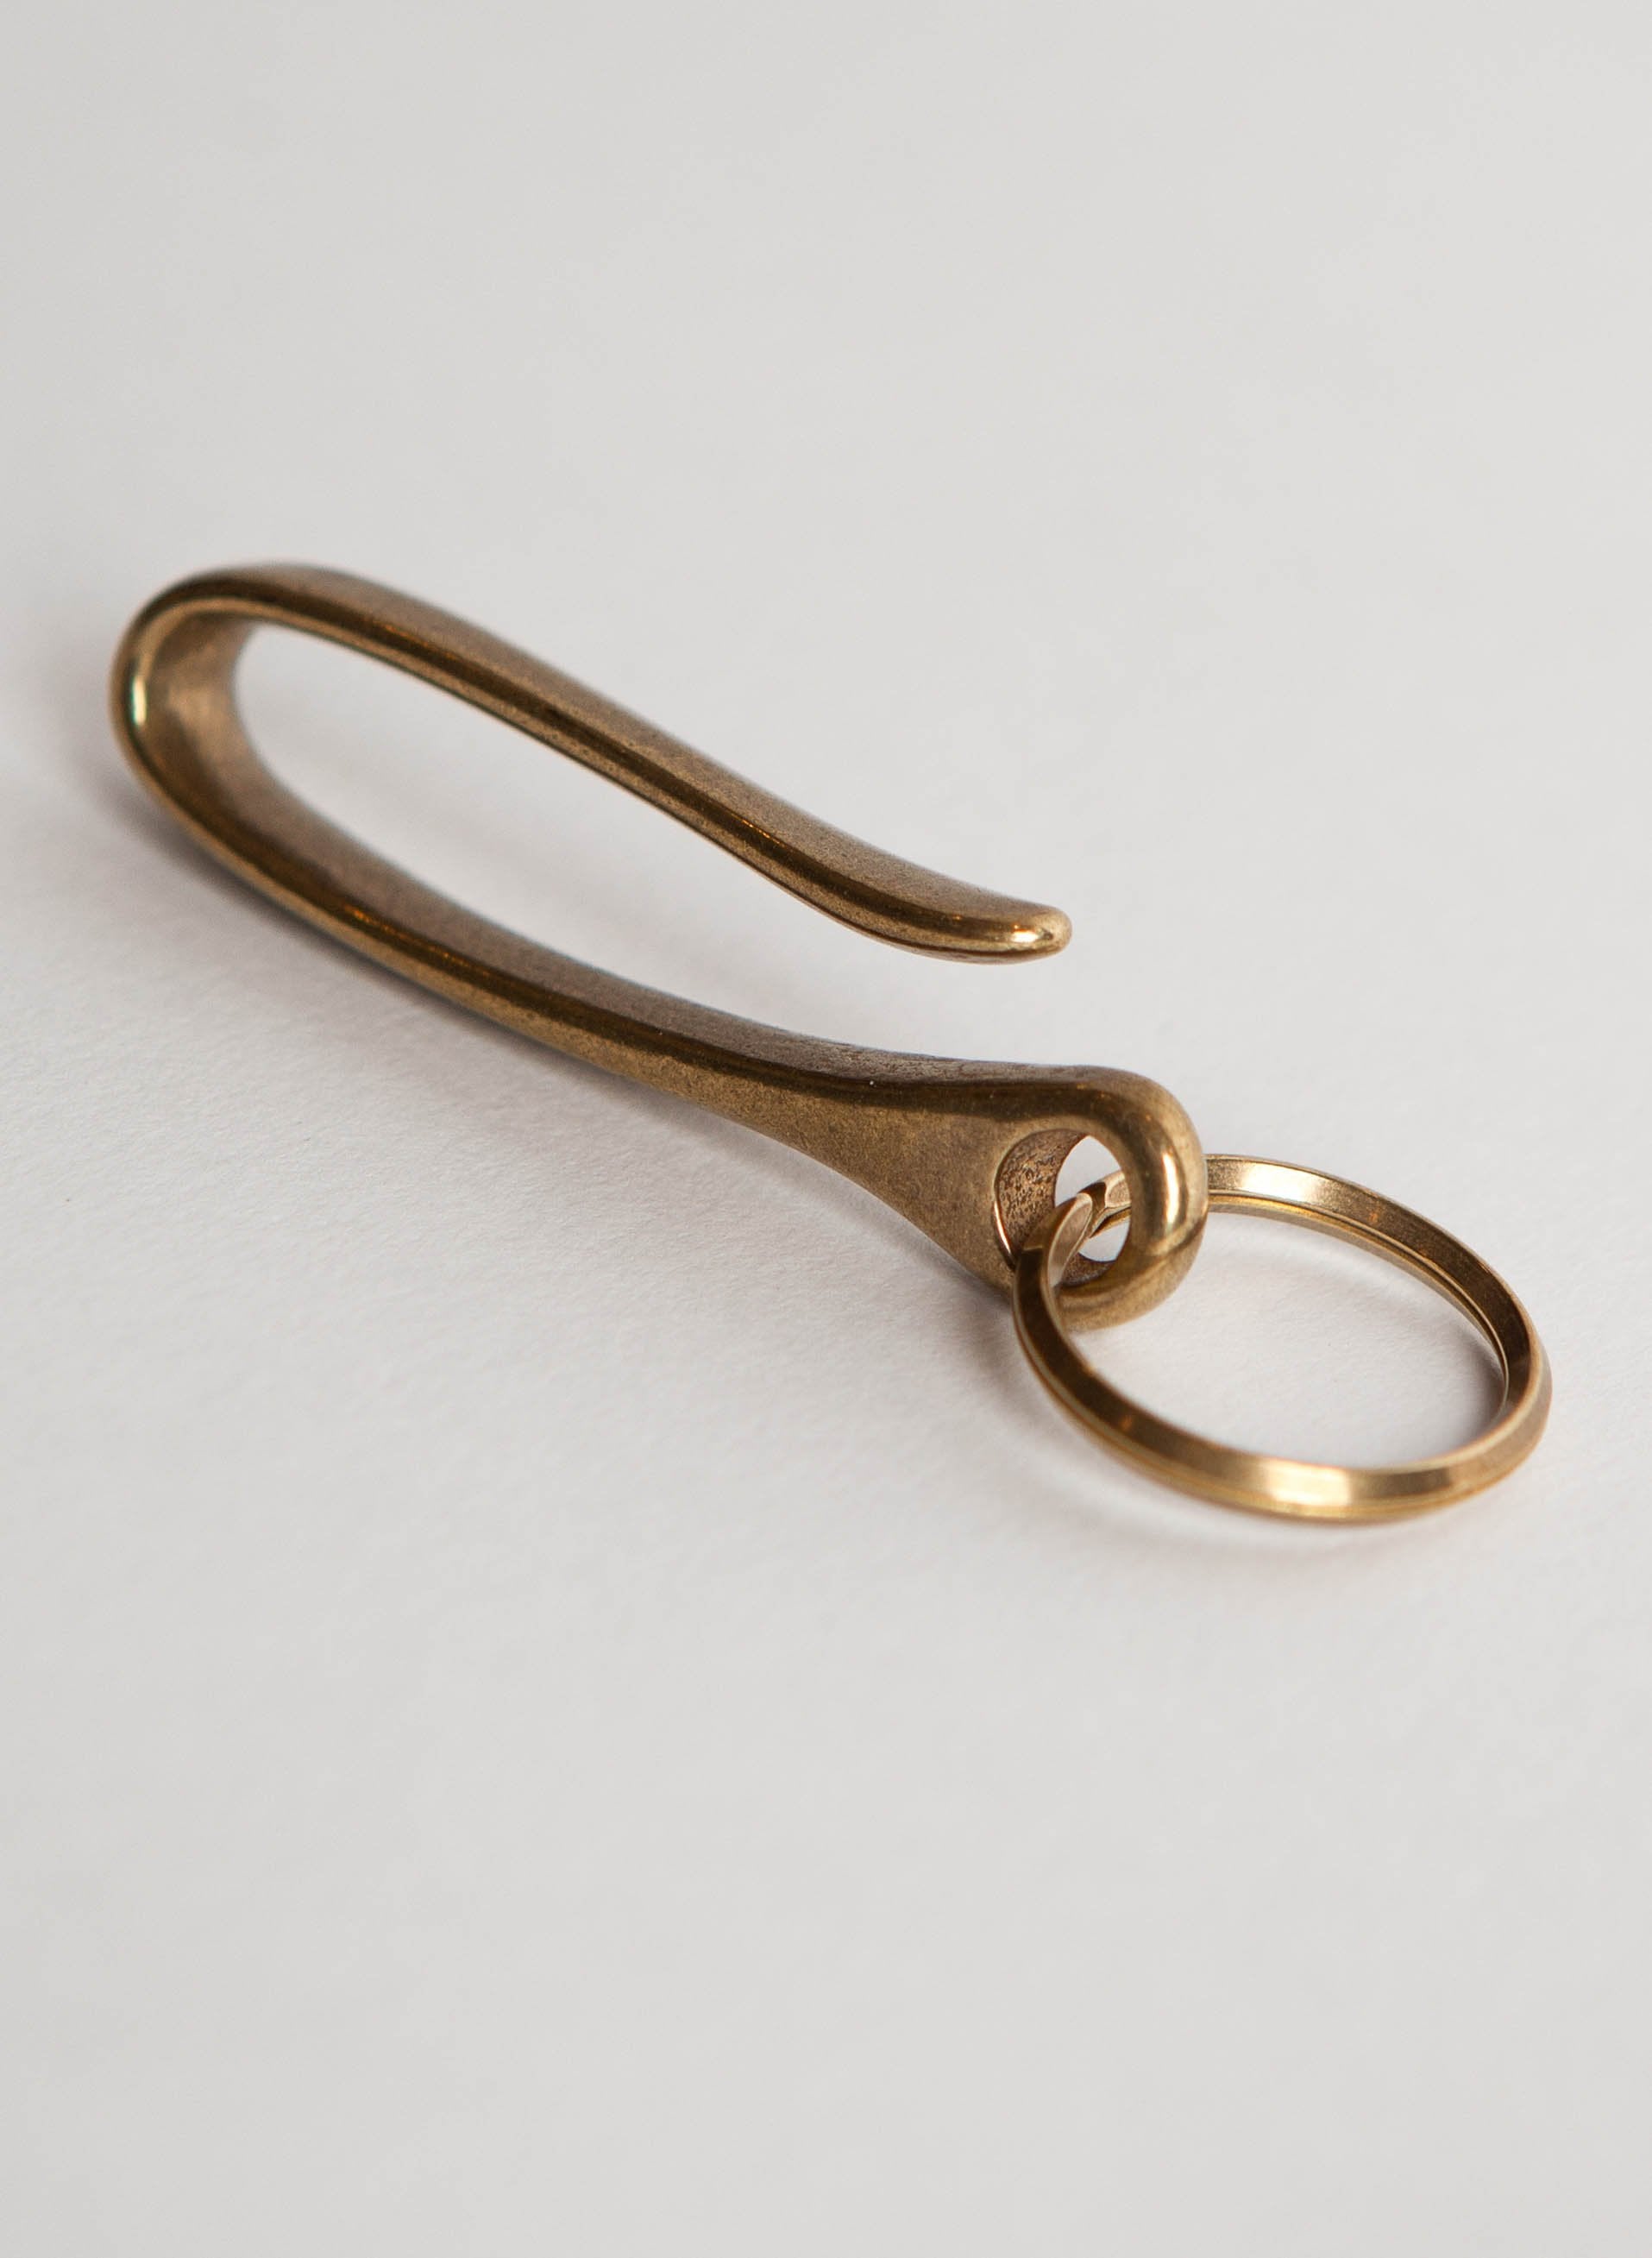 Handmade Brass, Japanese Fish Hook Key Chain Belt Hook Solid Brass